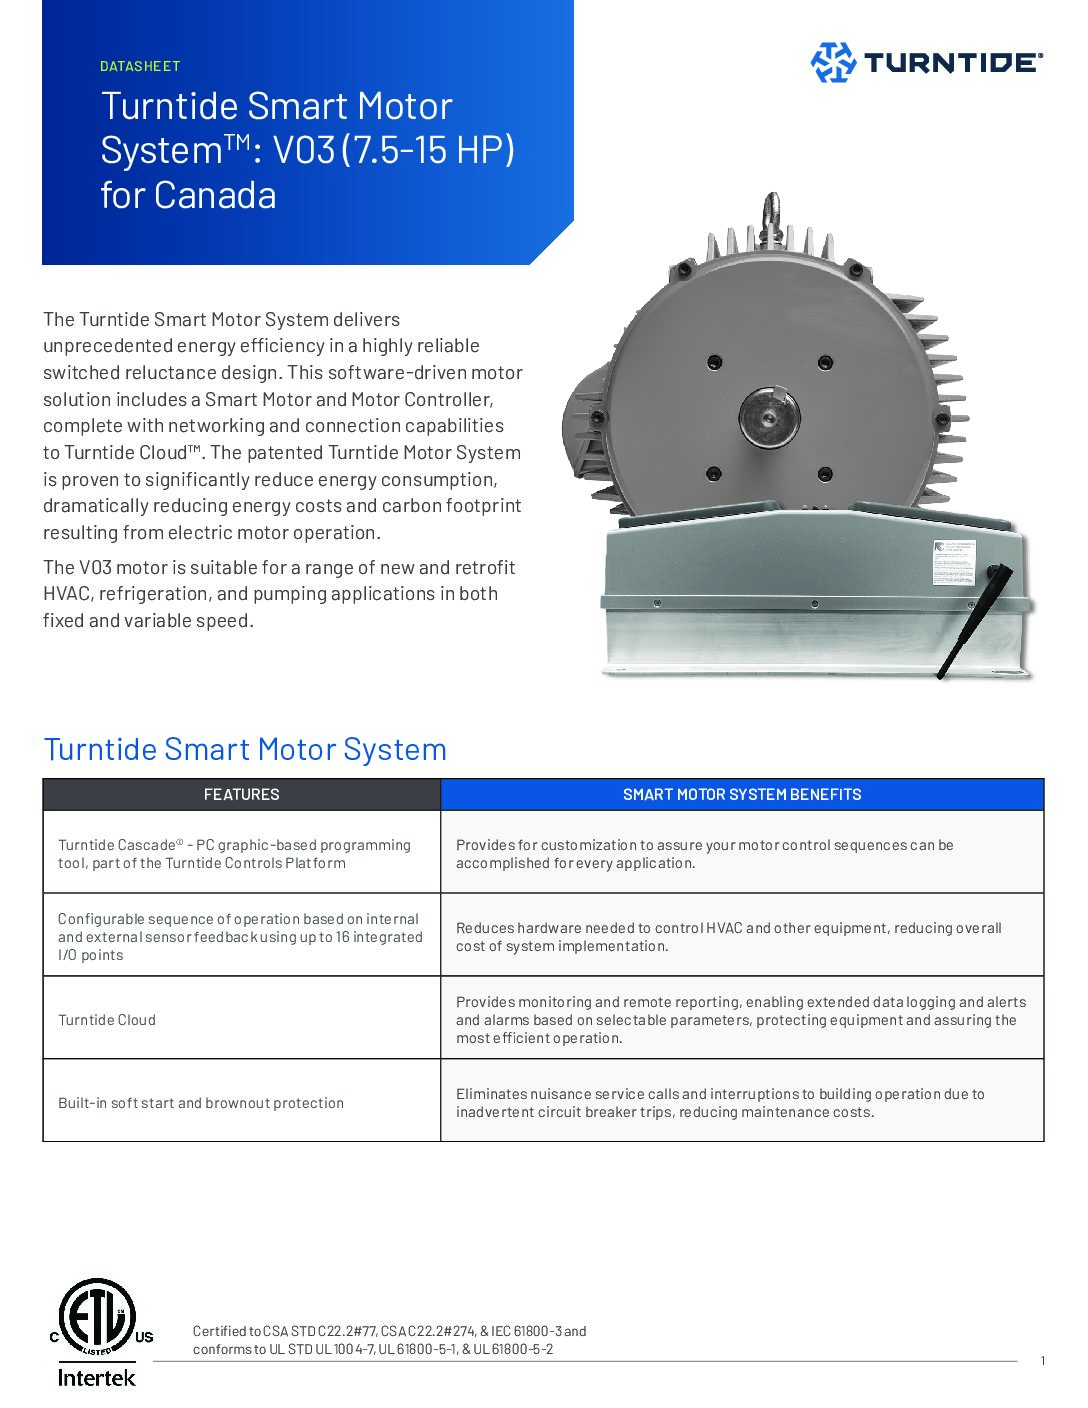 Turntide Smart Motor System: V03 (7.5-15HP) for Canada Asset Cover